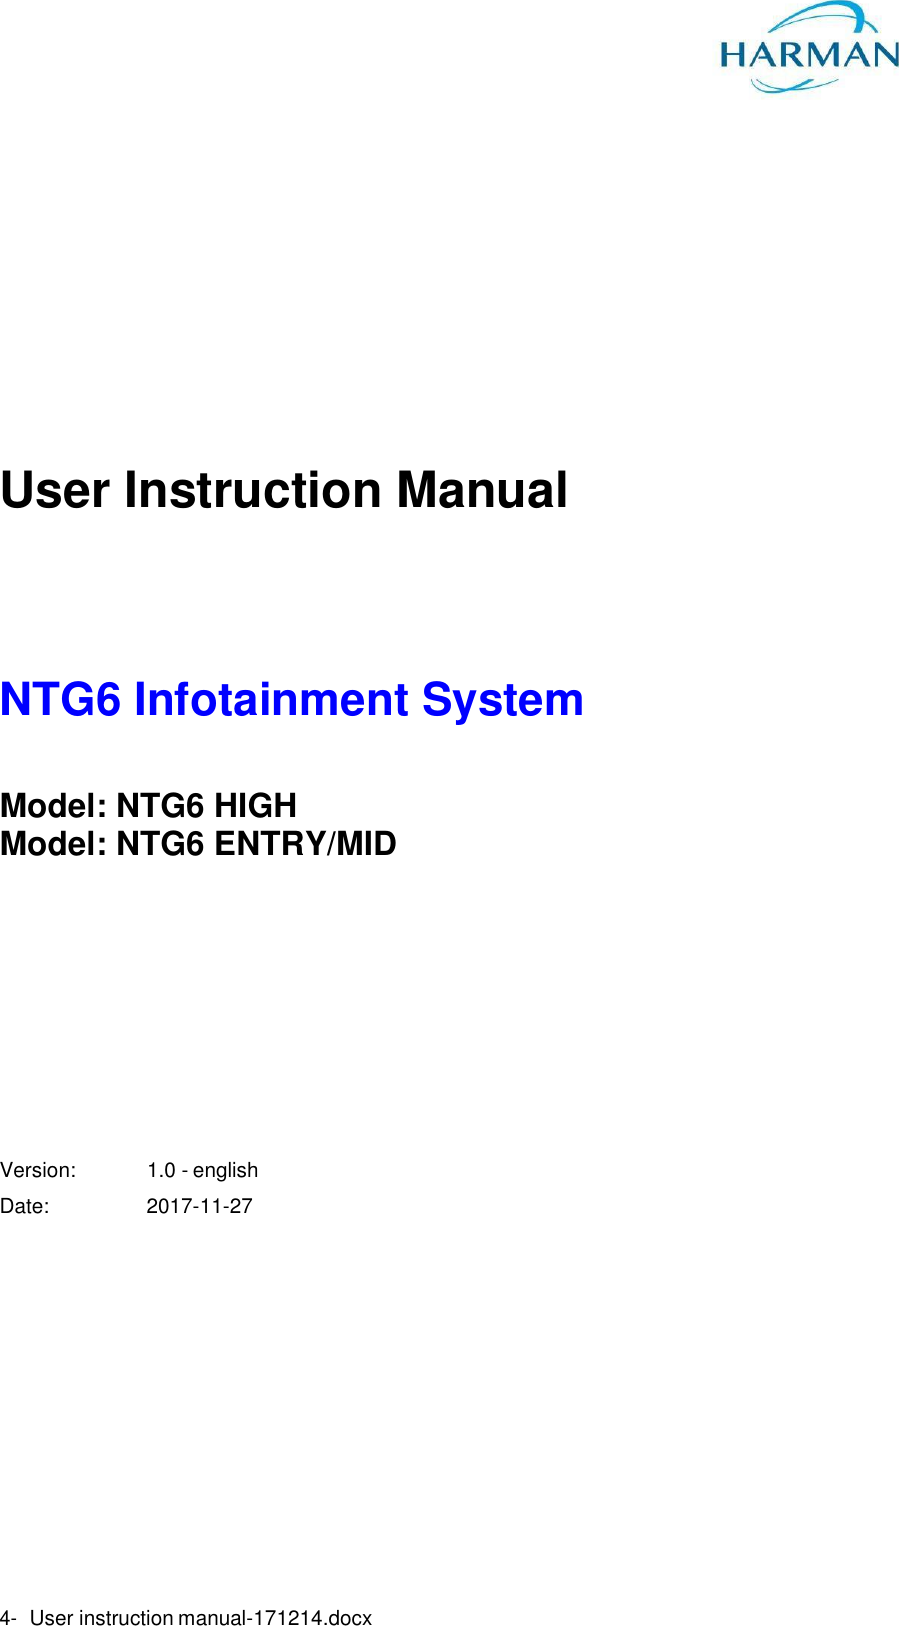                User Instruction Manual   NTG6 Infotainment System  Model: NTG6 HIGH Model: NTG6 ENTRY/MID        Version:  1.0 - english Date:  2017-11-27               4- User instruction manual-171214.docx 